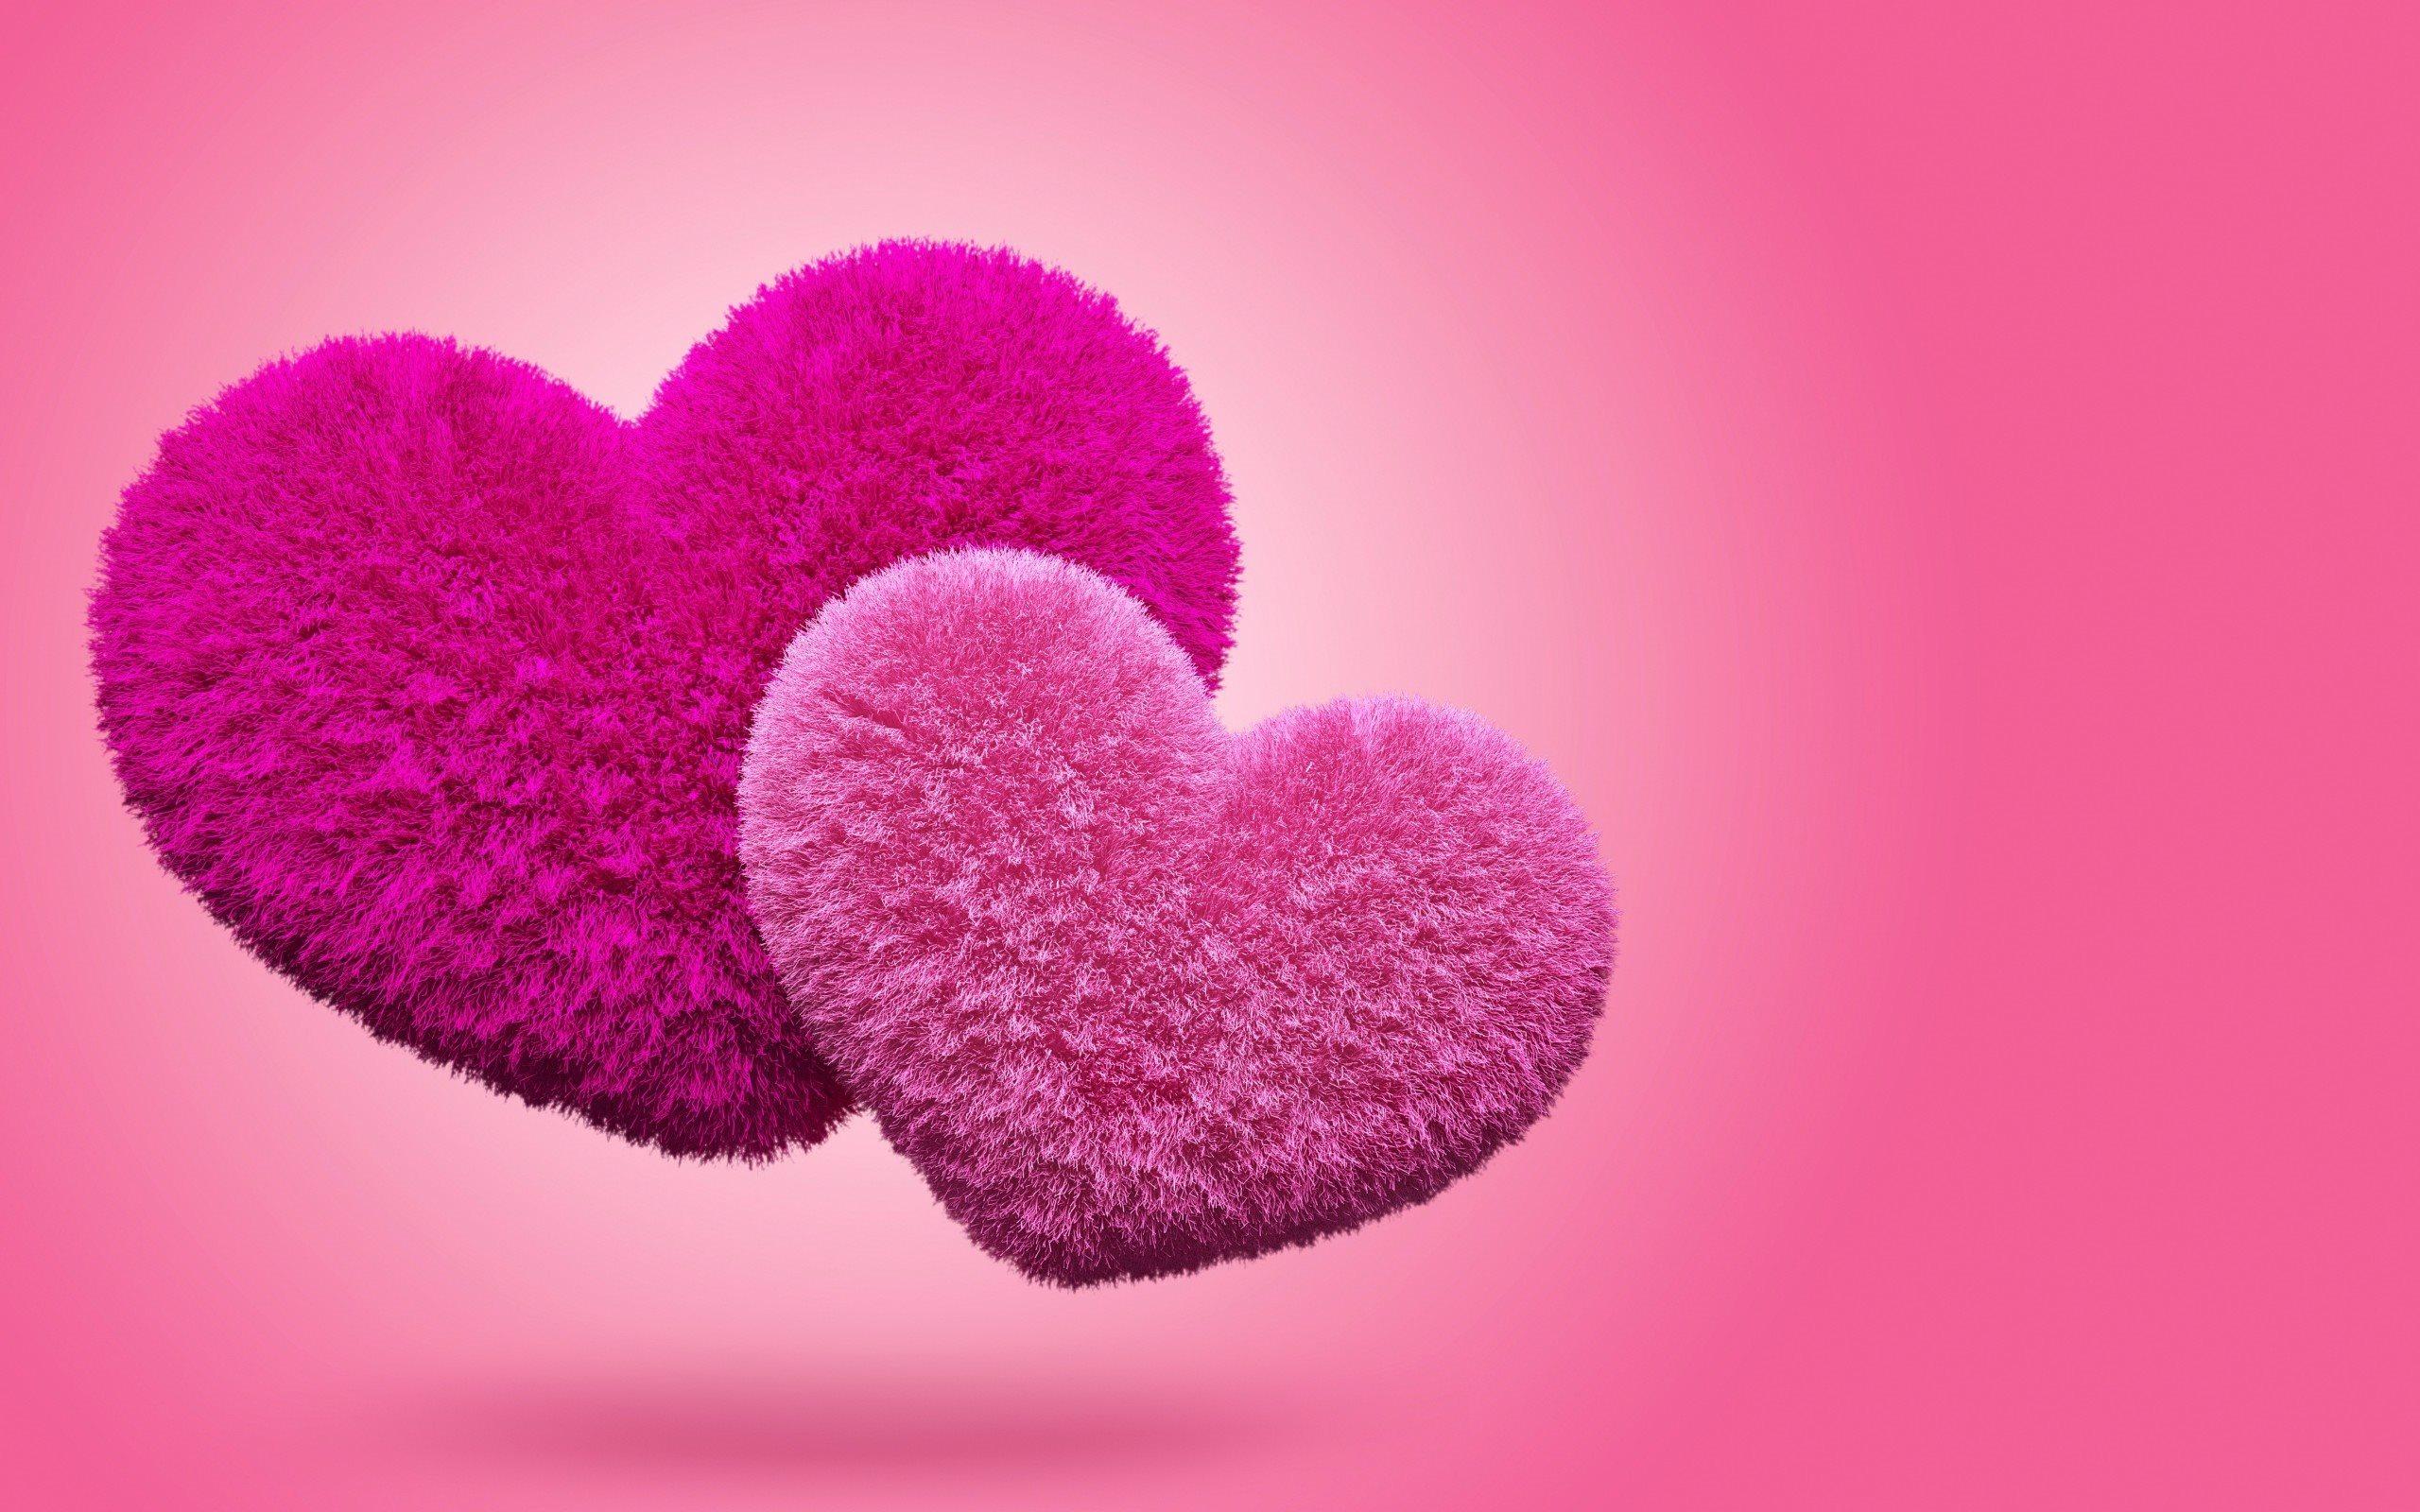 Download wallpaper plush heart, heart, two hearts, love, fluffy